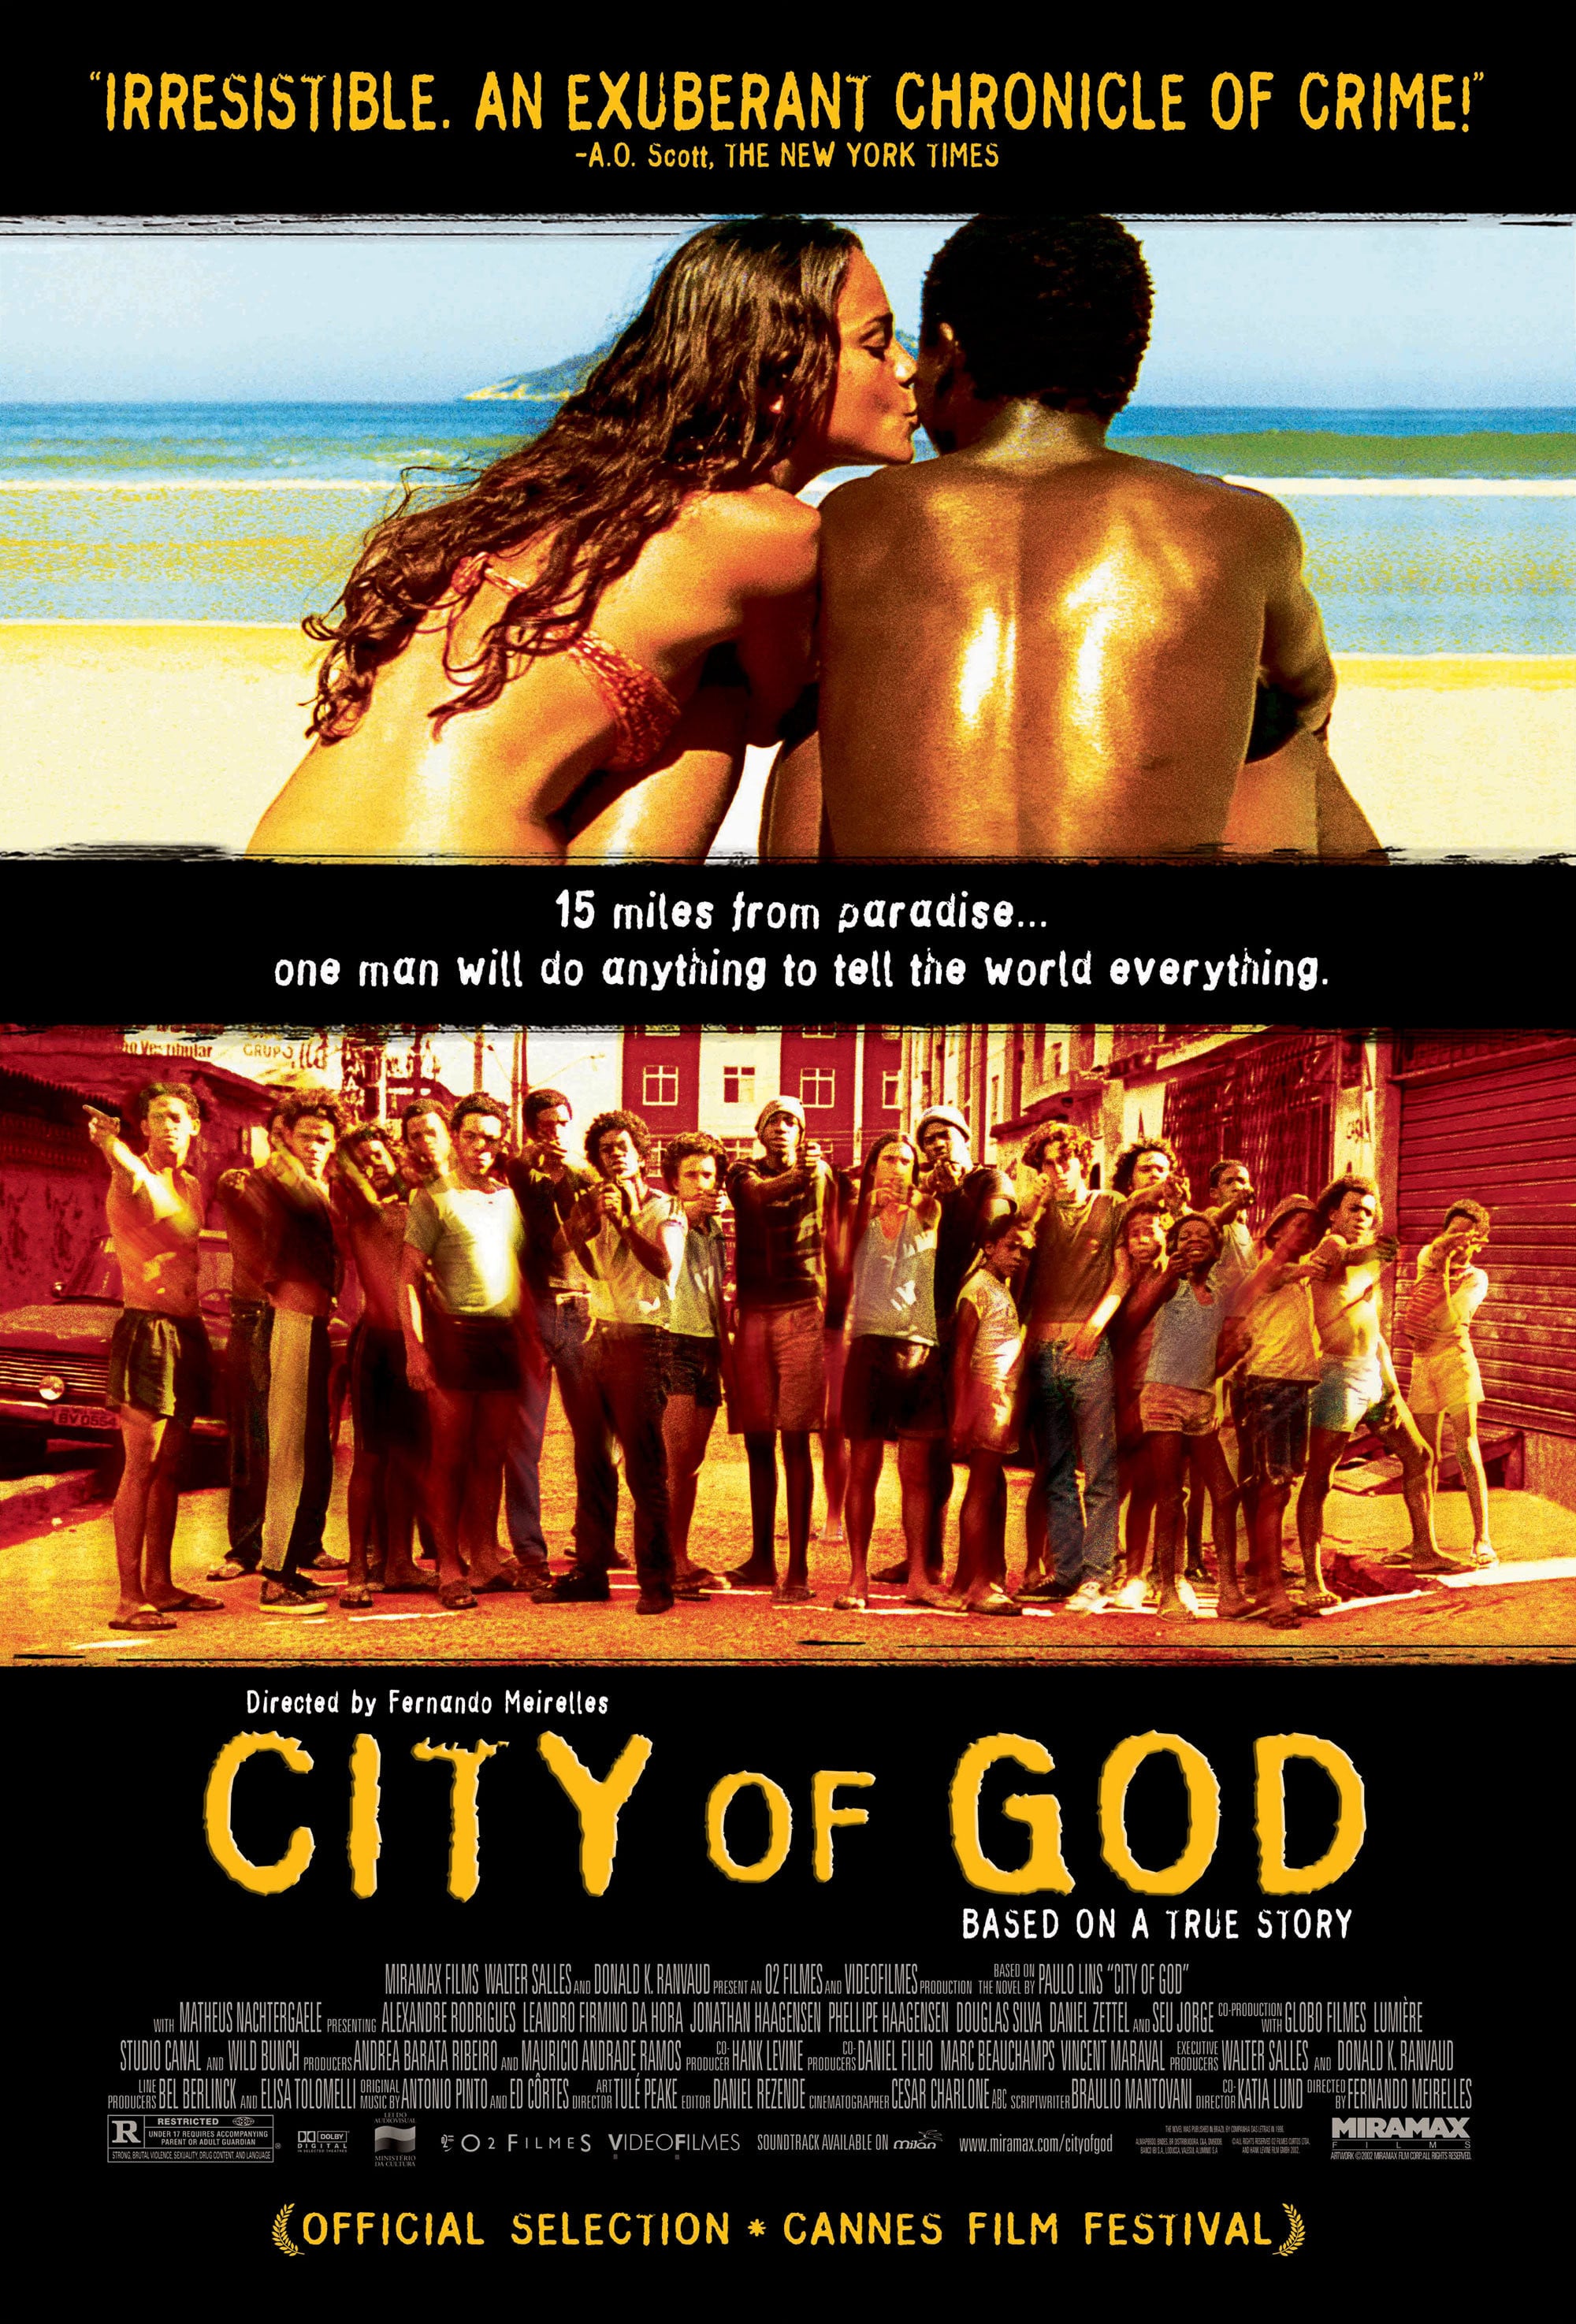 Stiahni si Filmy CZ/SK dabing Mesto Bohu / City of God (2002)(CZ)(1080p) = CSFD 89%